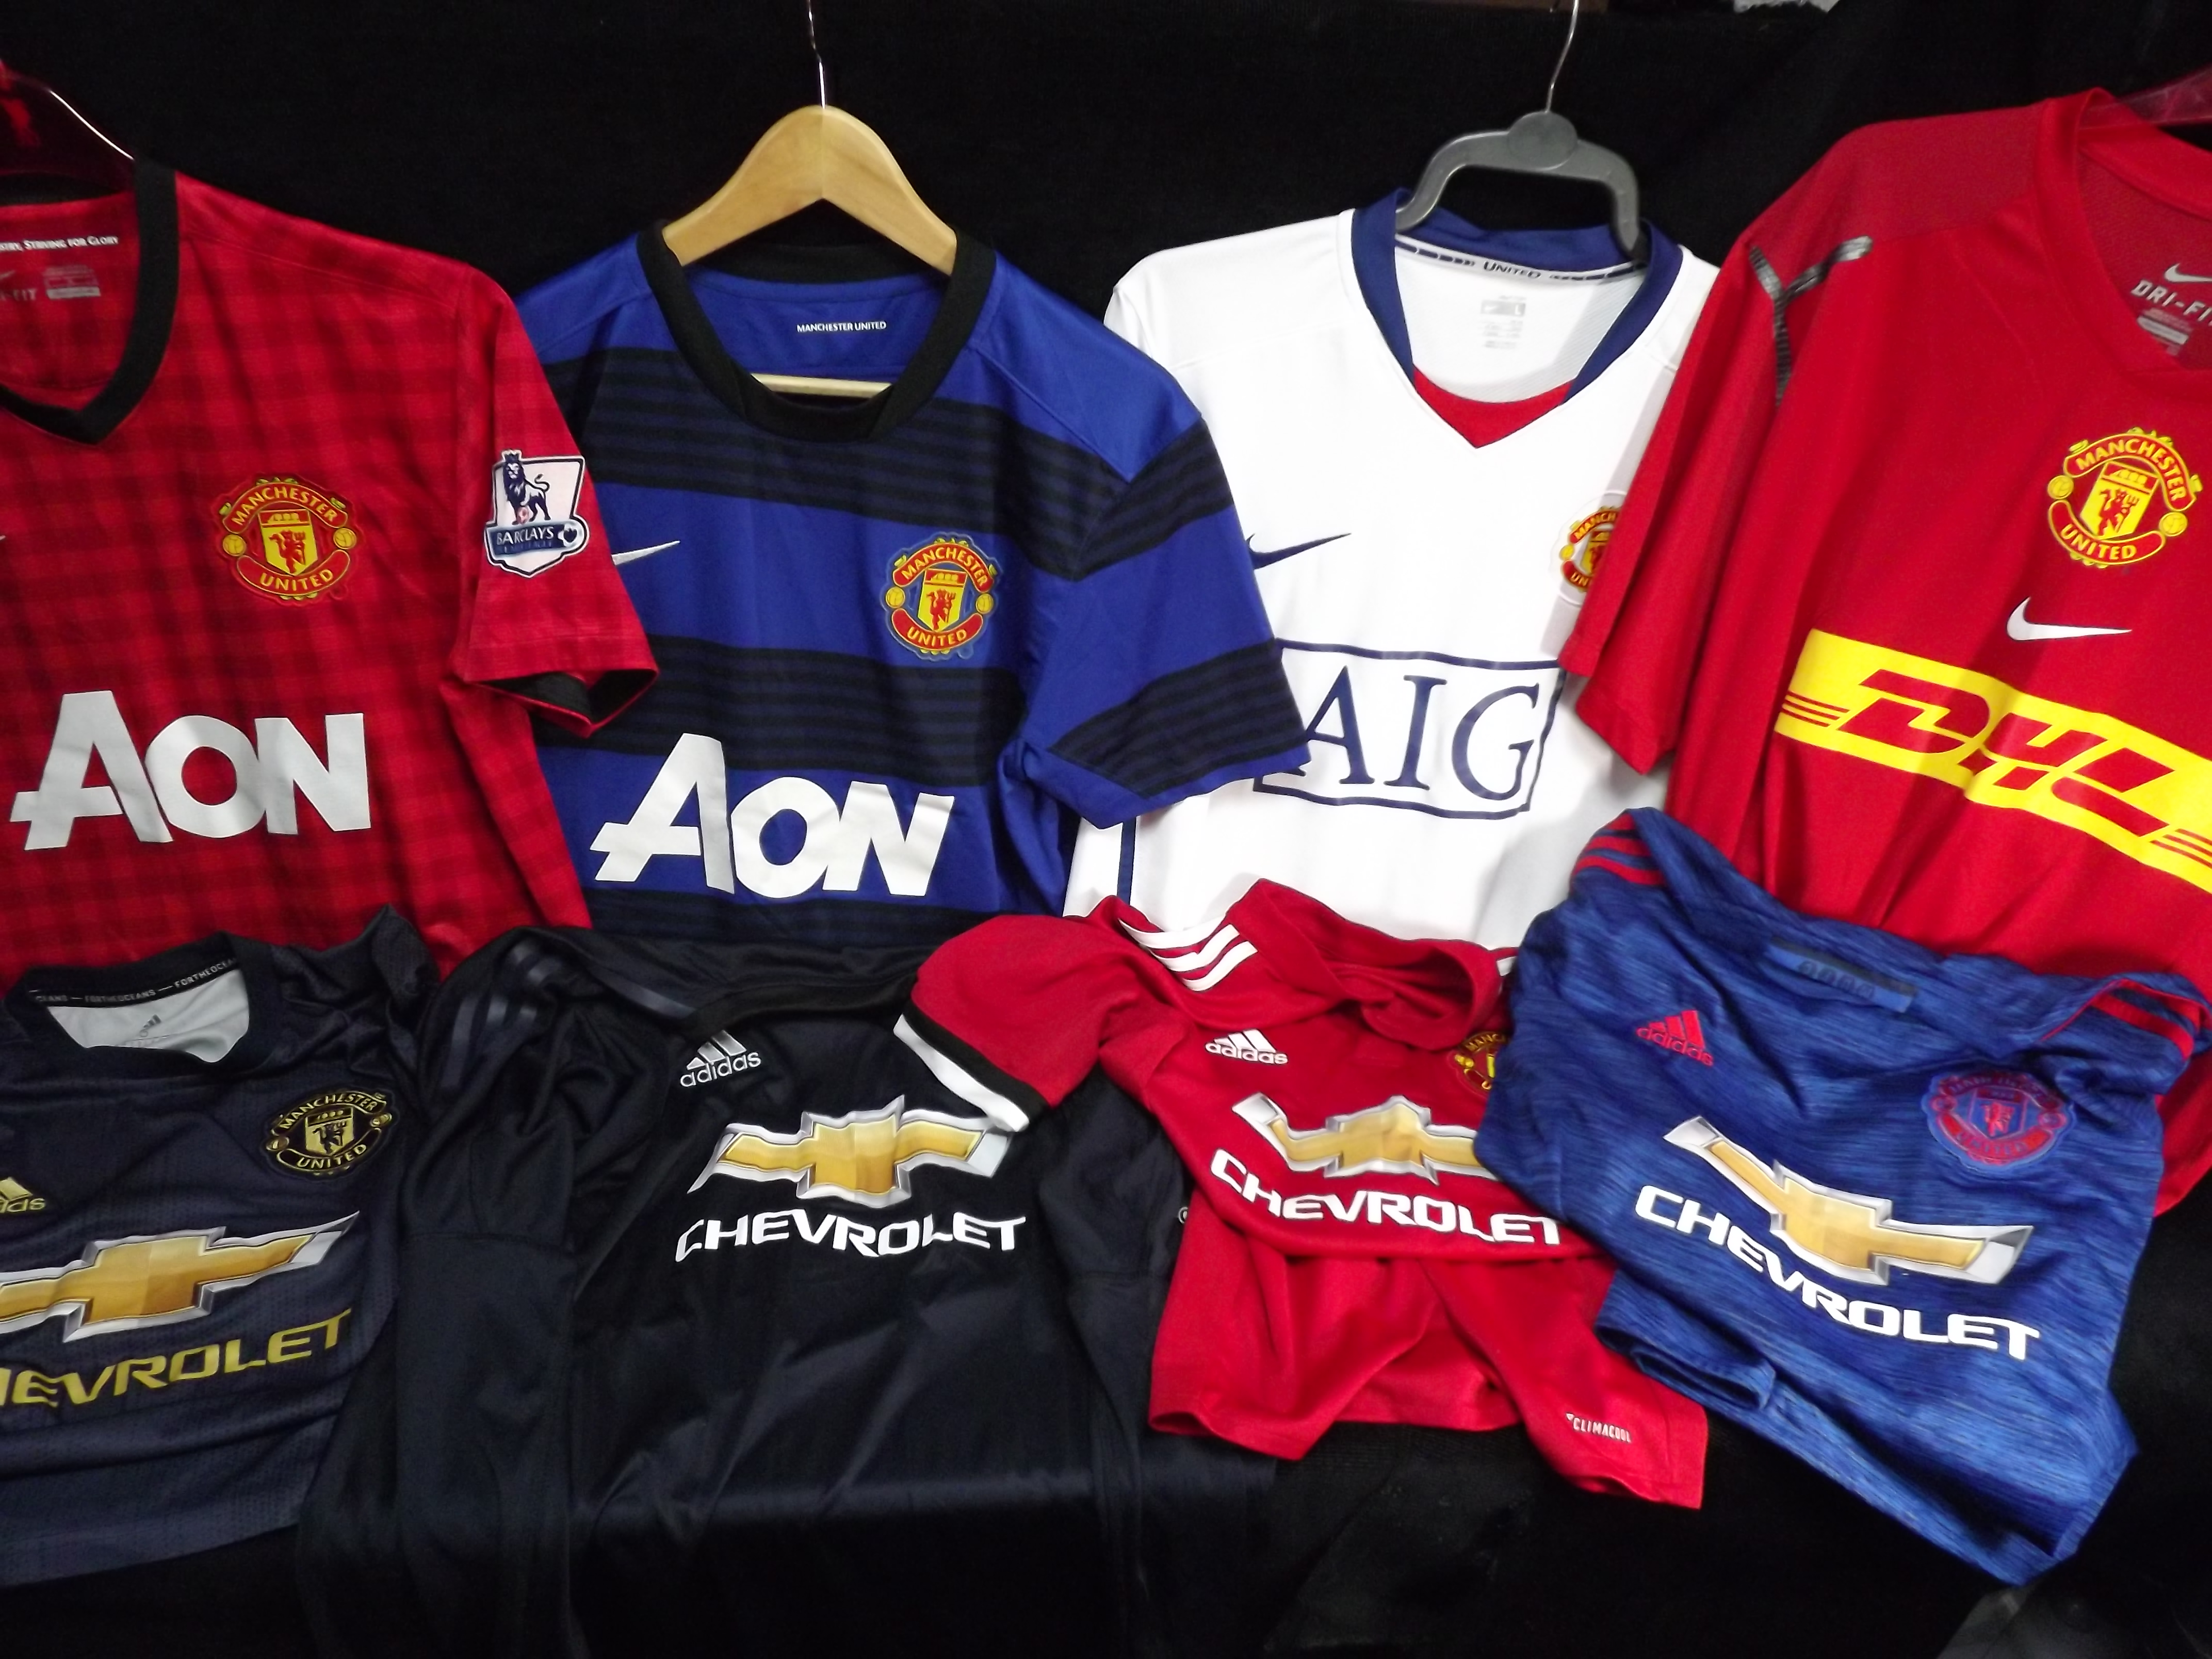 8 x Manchester United Football Shirts. Adidas Chevrolet. No.1 Home Goalkeeper Long Sleeve Shirt in